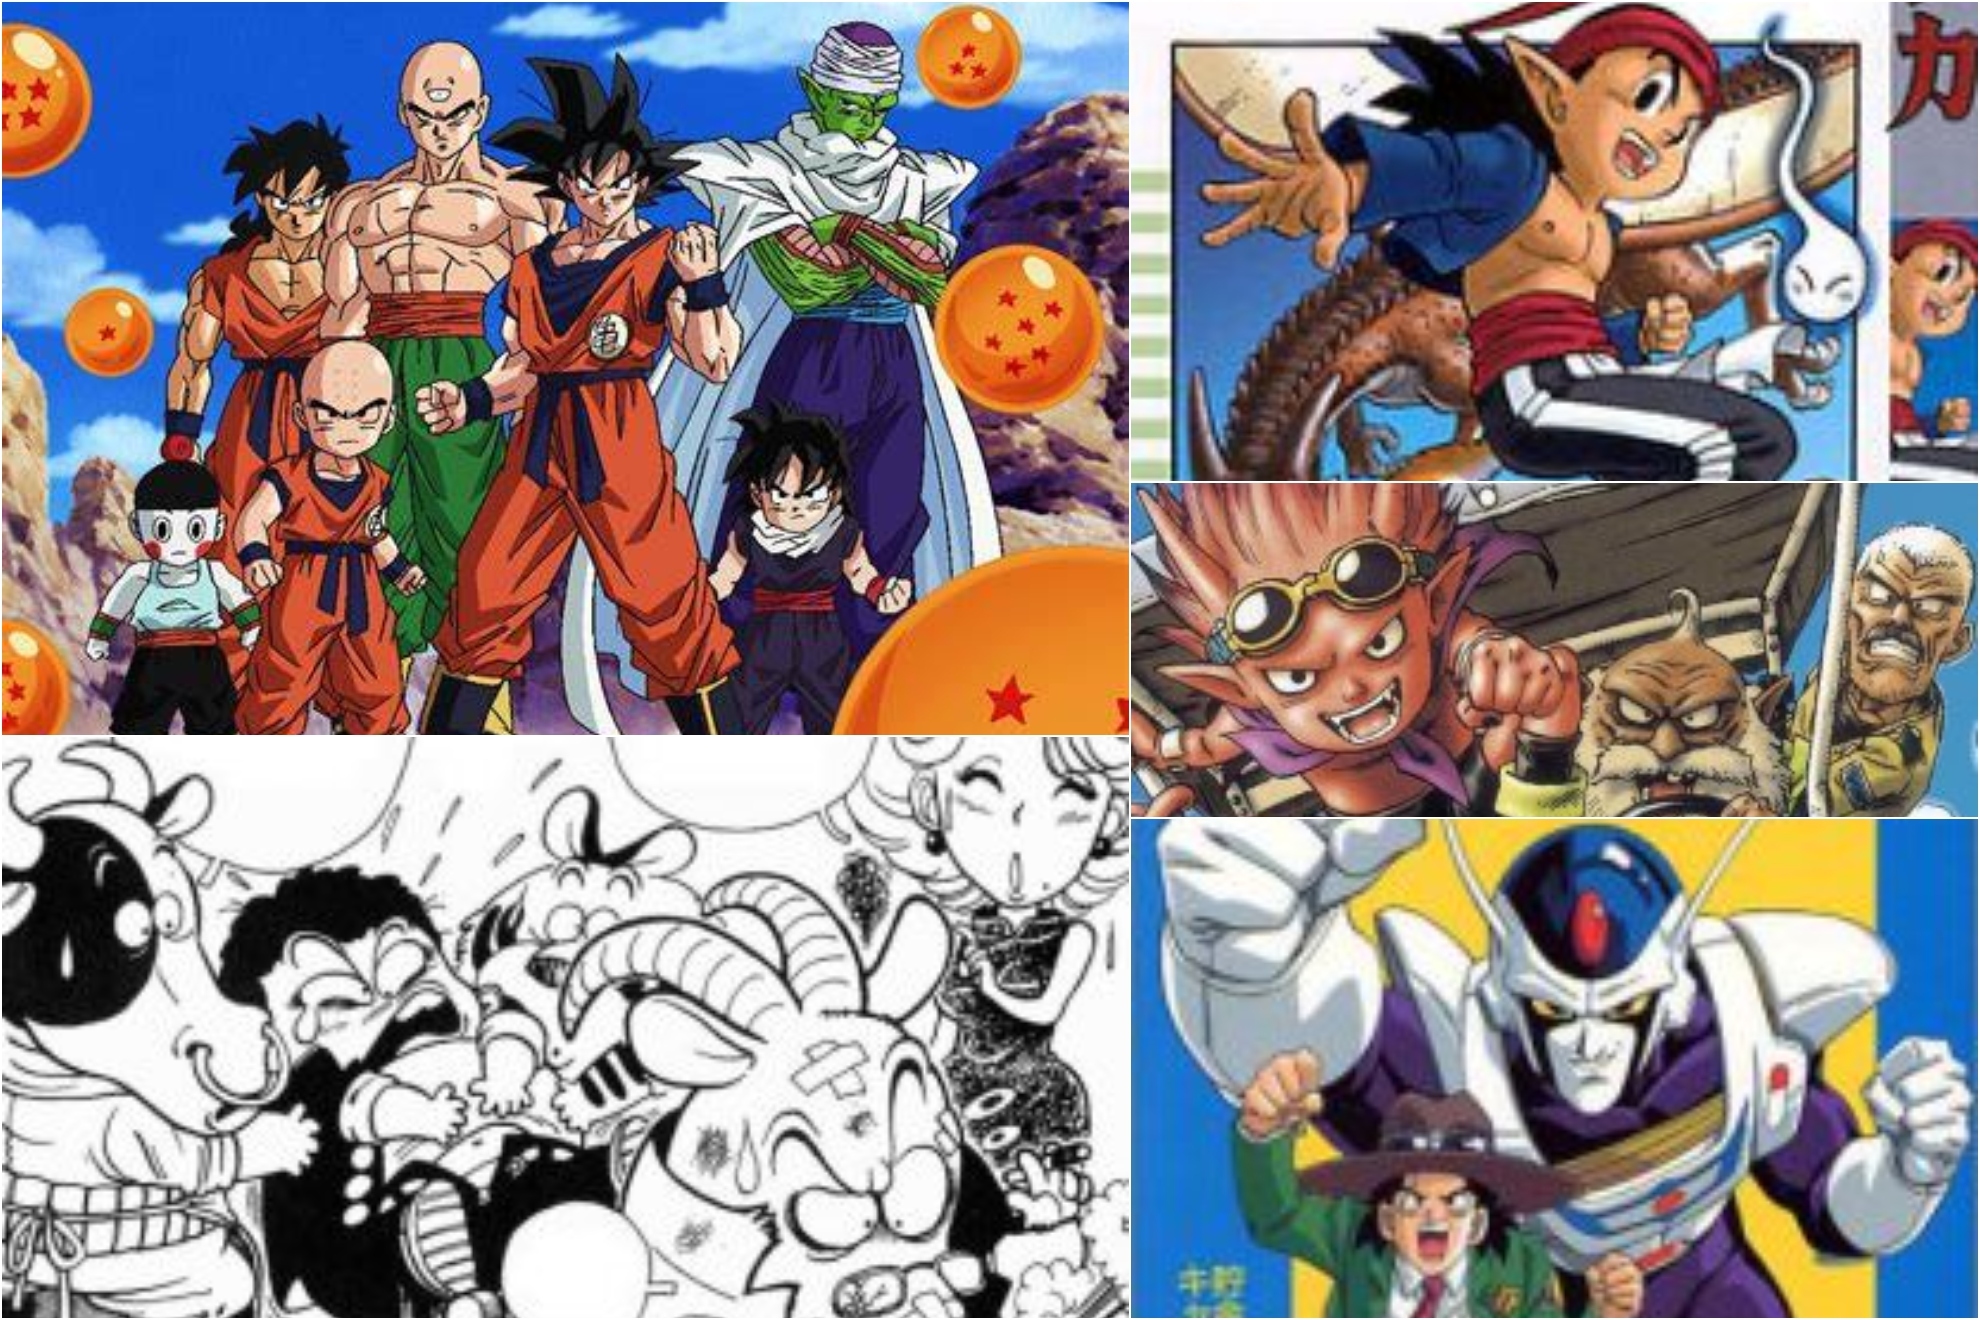 Qu mangas public Akira Toriyama, aparte de Dragon Ball?